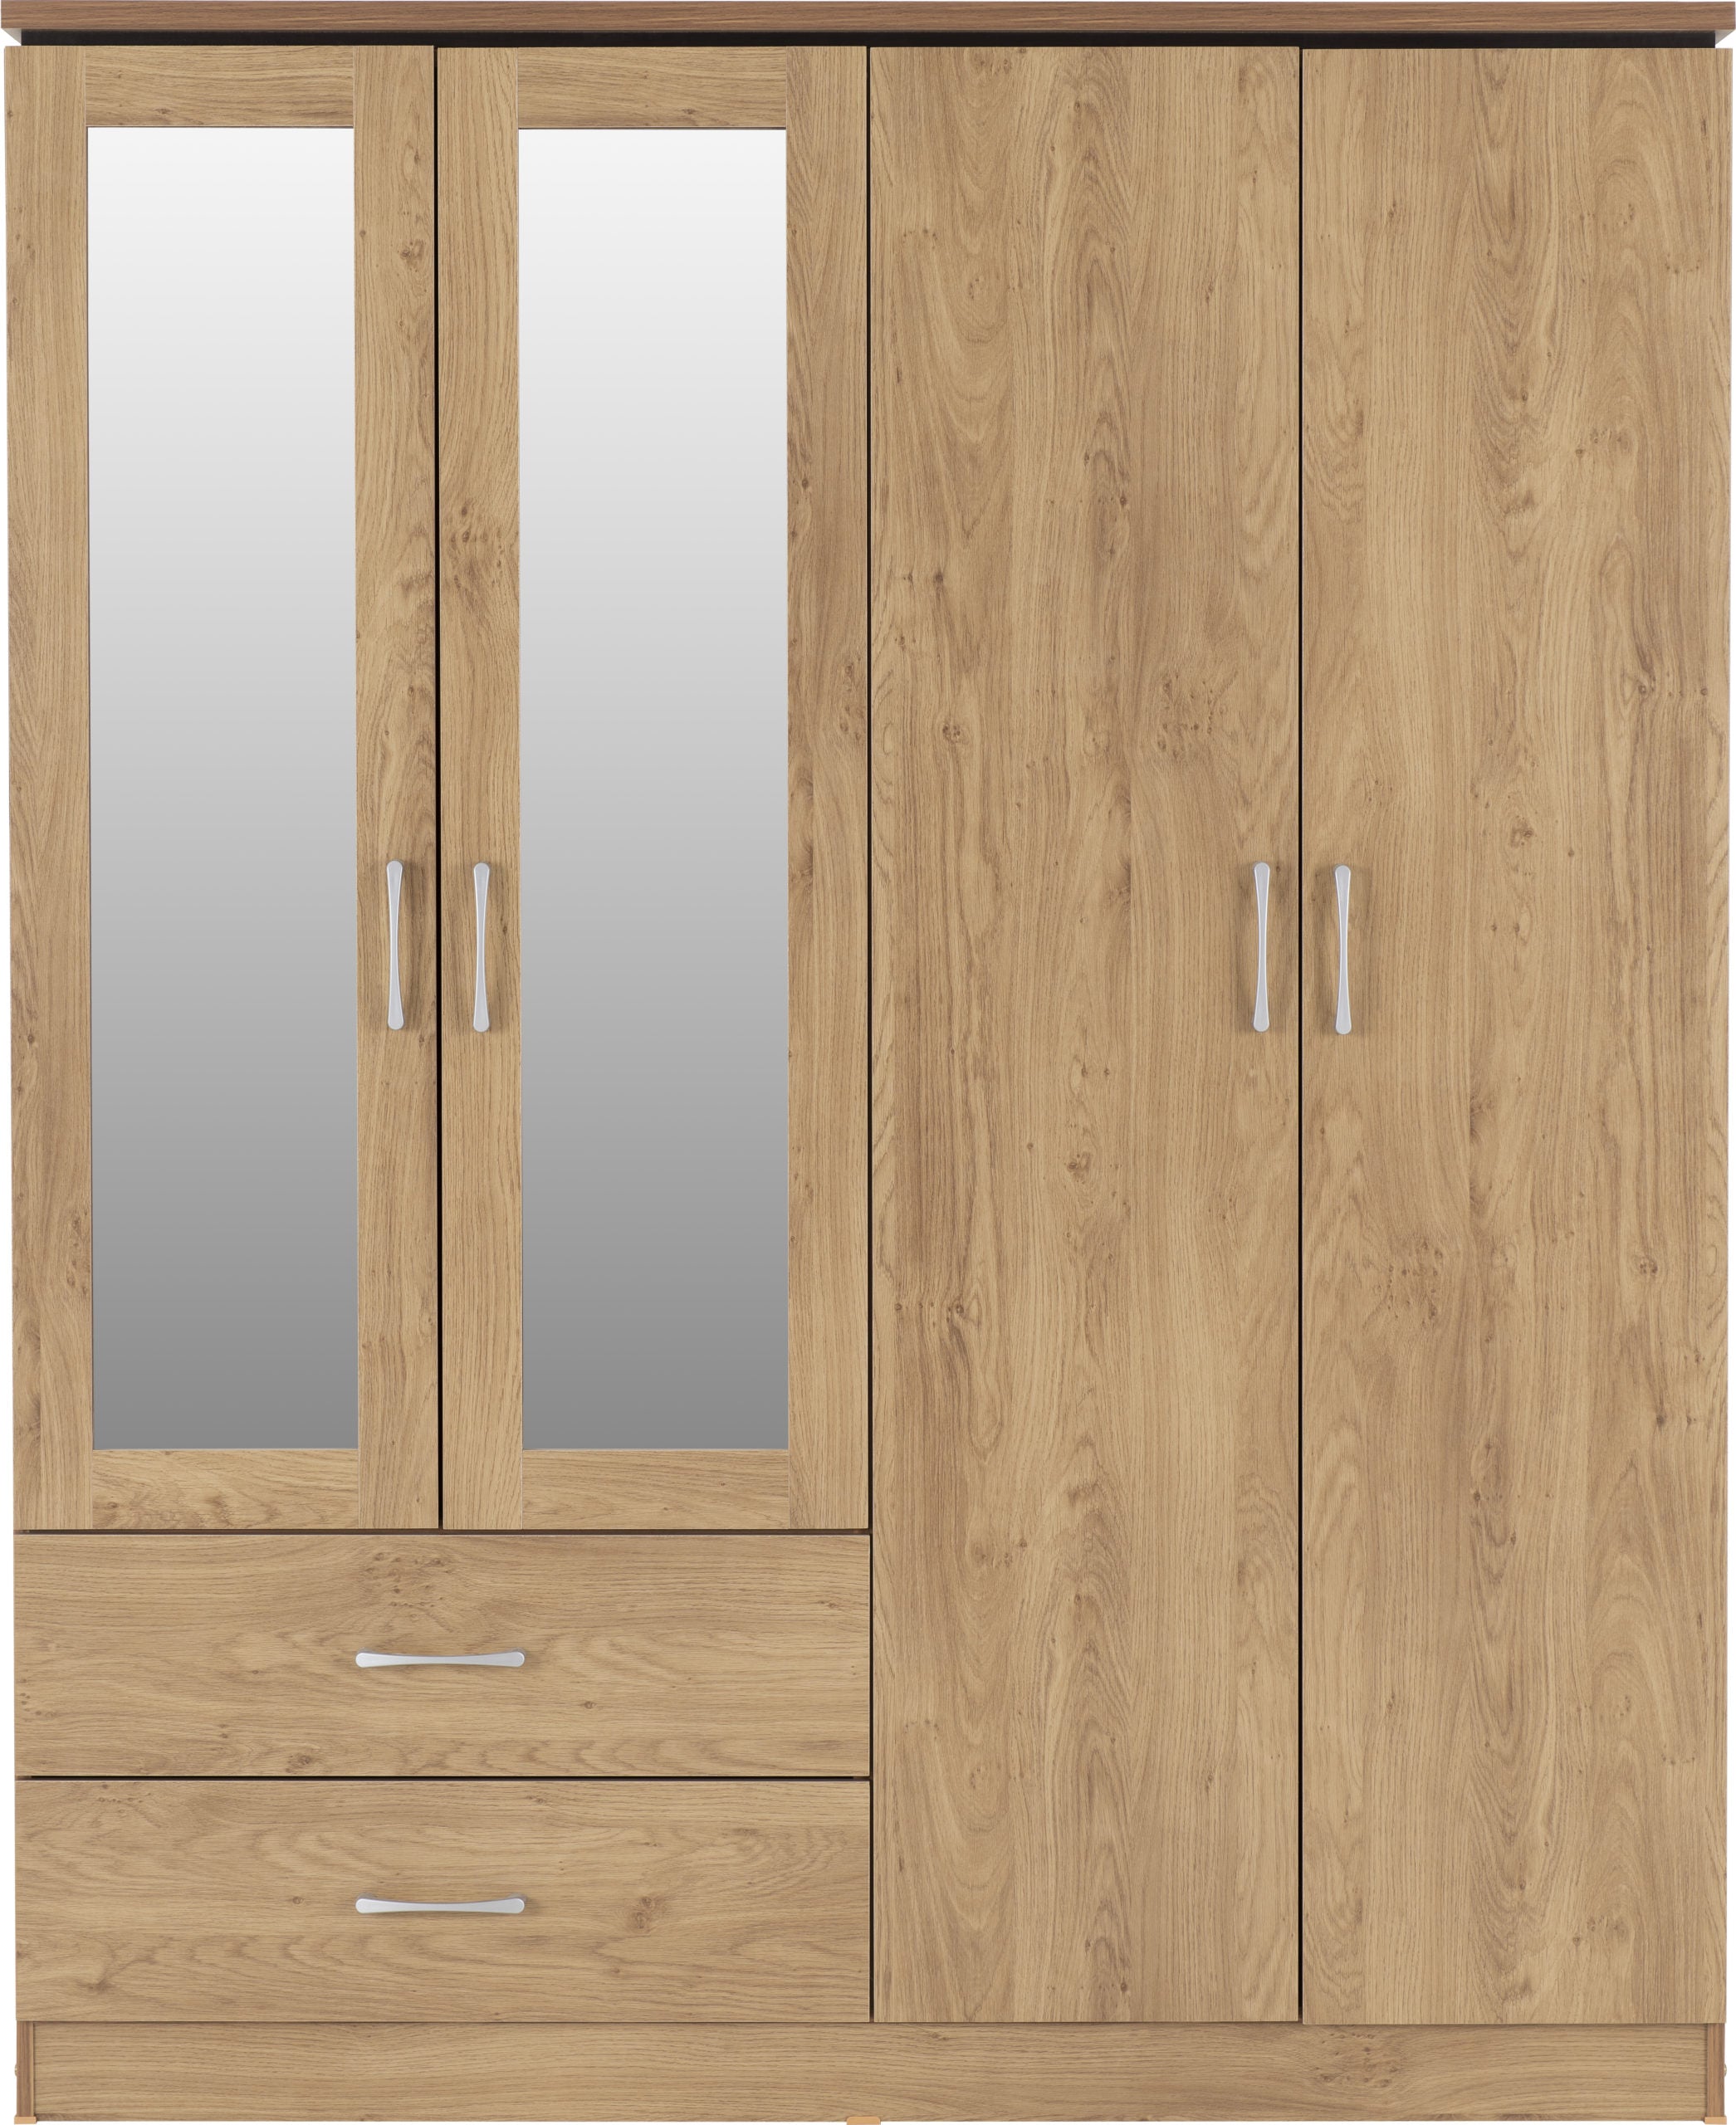 4 door 2 drawer mirrored wardrobe